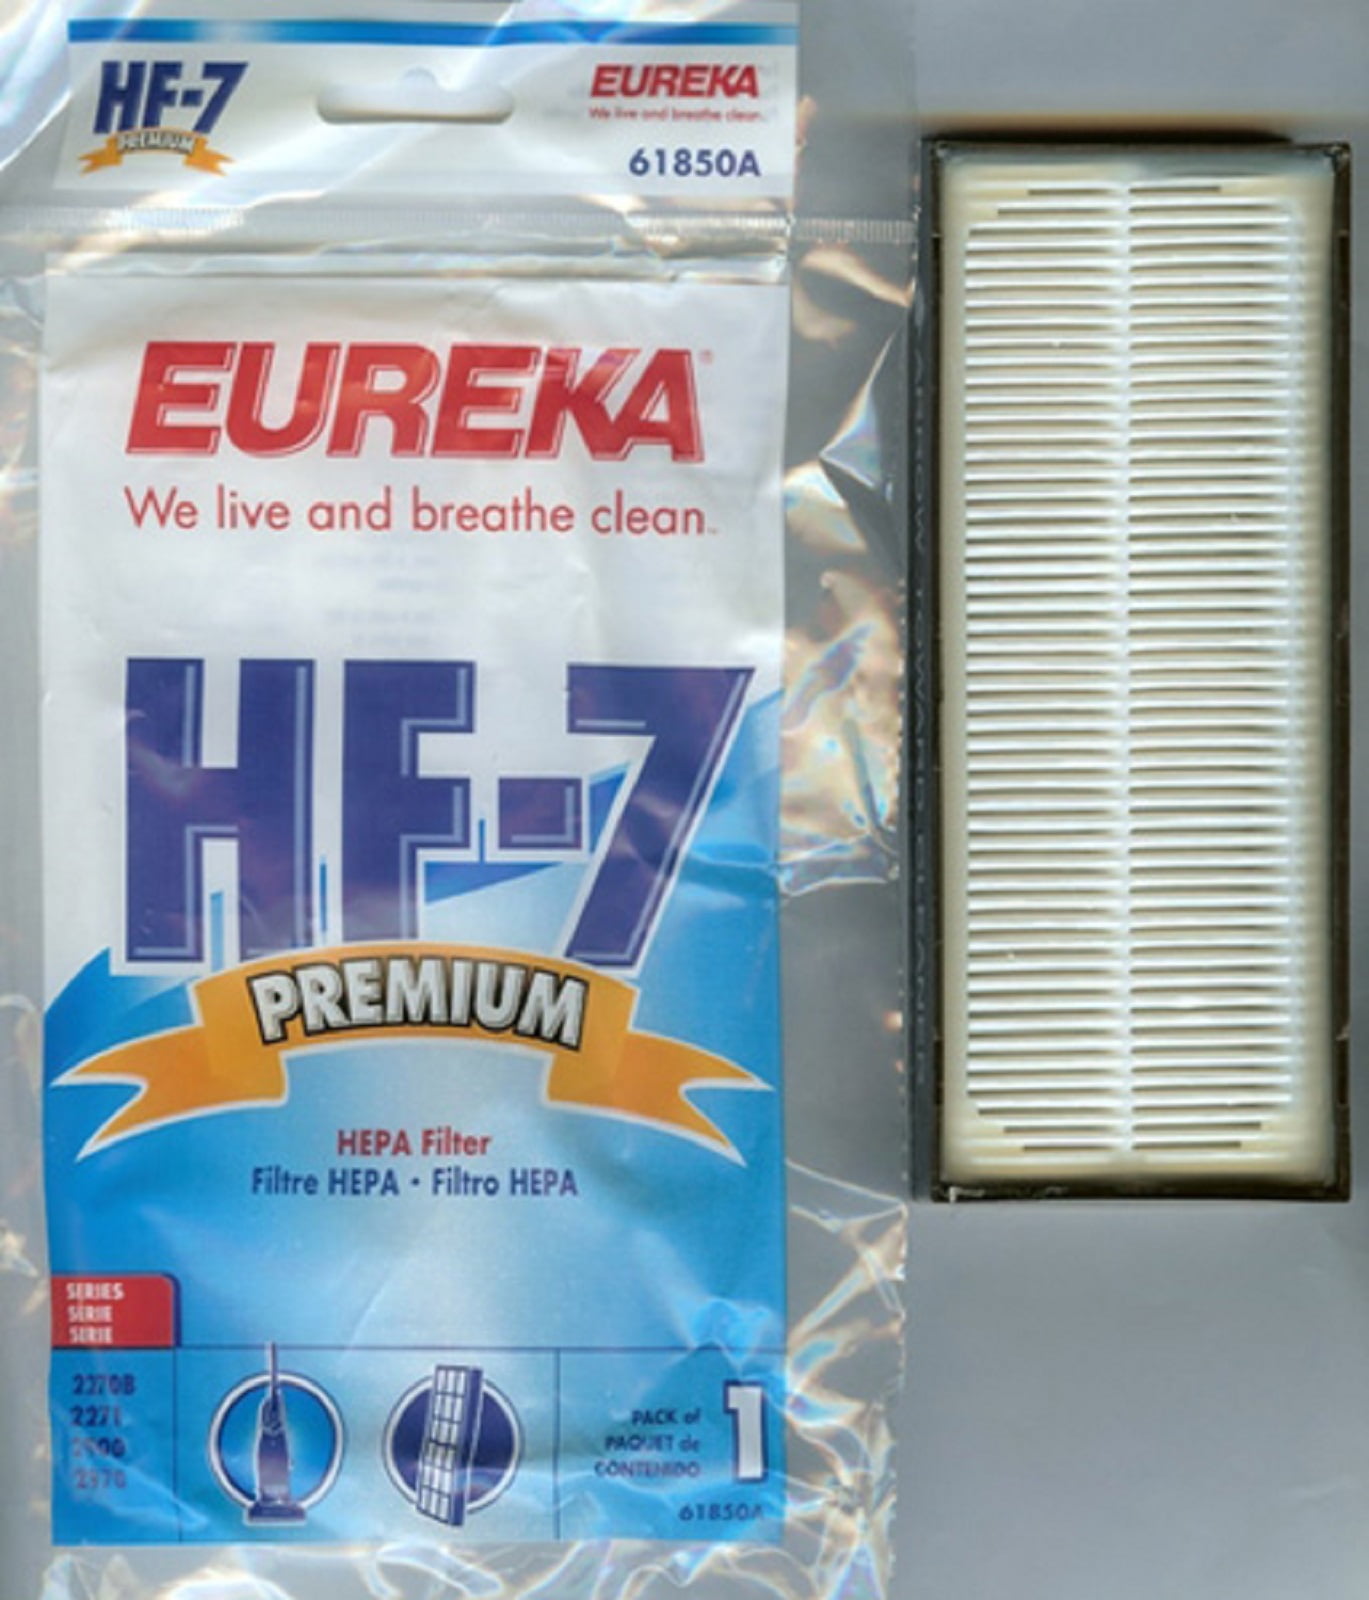 Febreze Eureka HF-7 Vacuum Filter for Models 2270 2270B 2271 2900 2940 2970 3270 